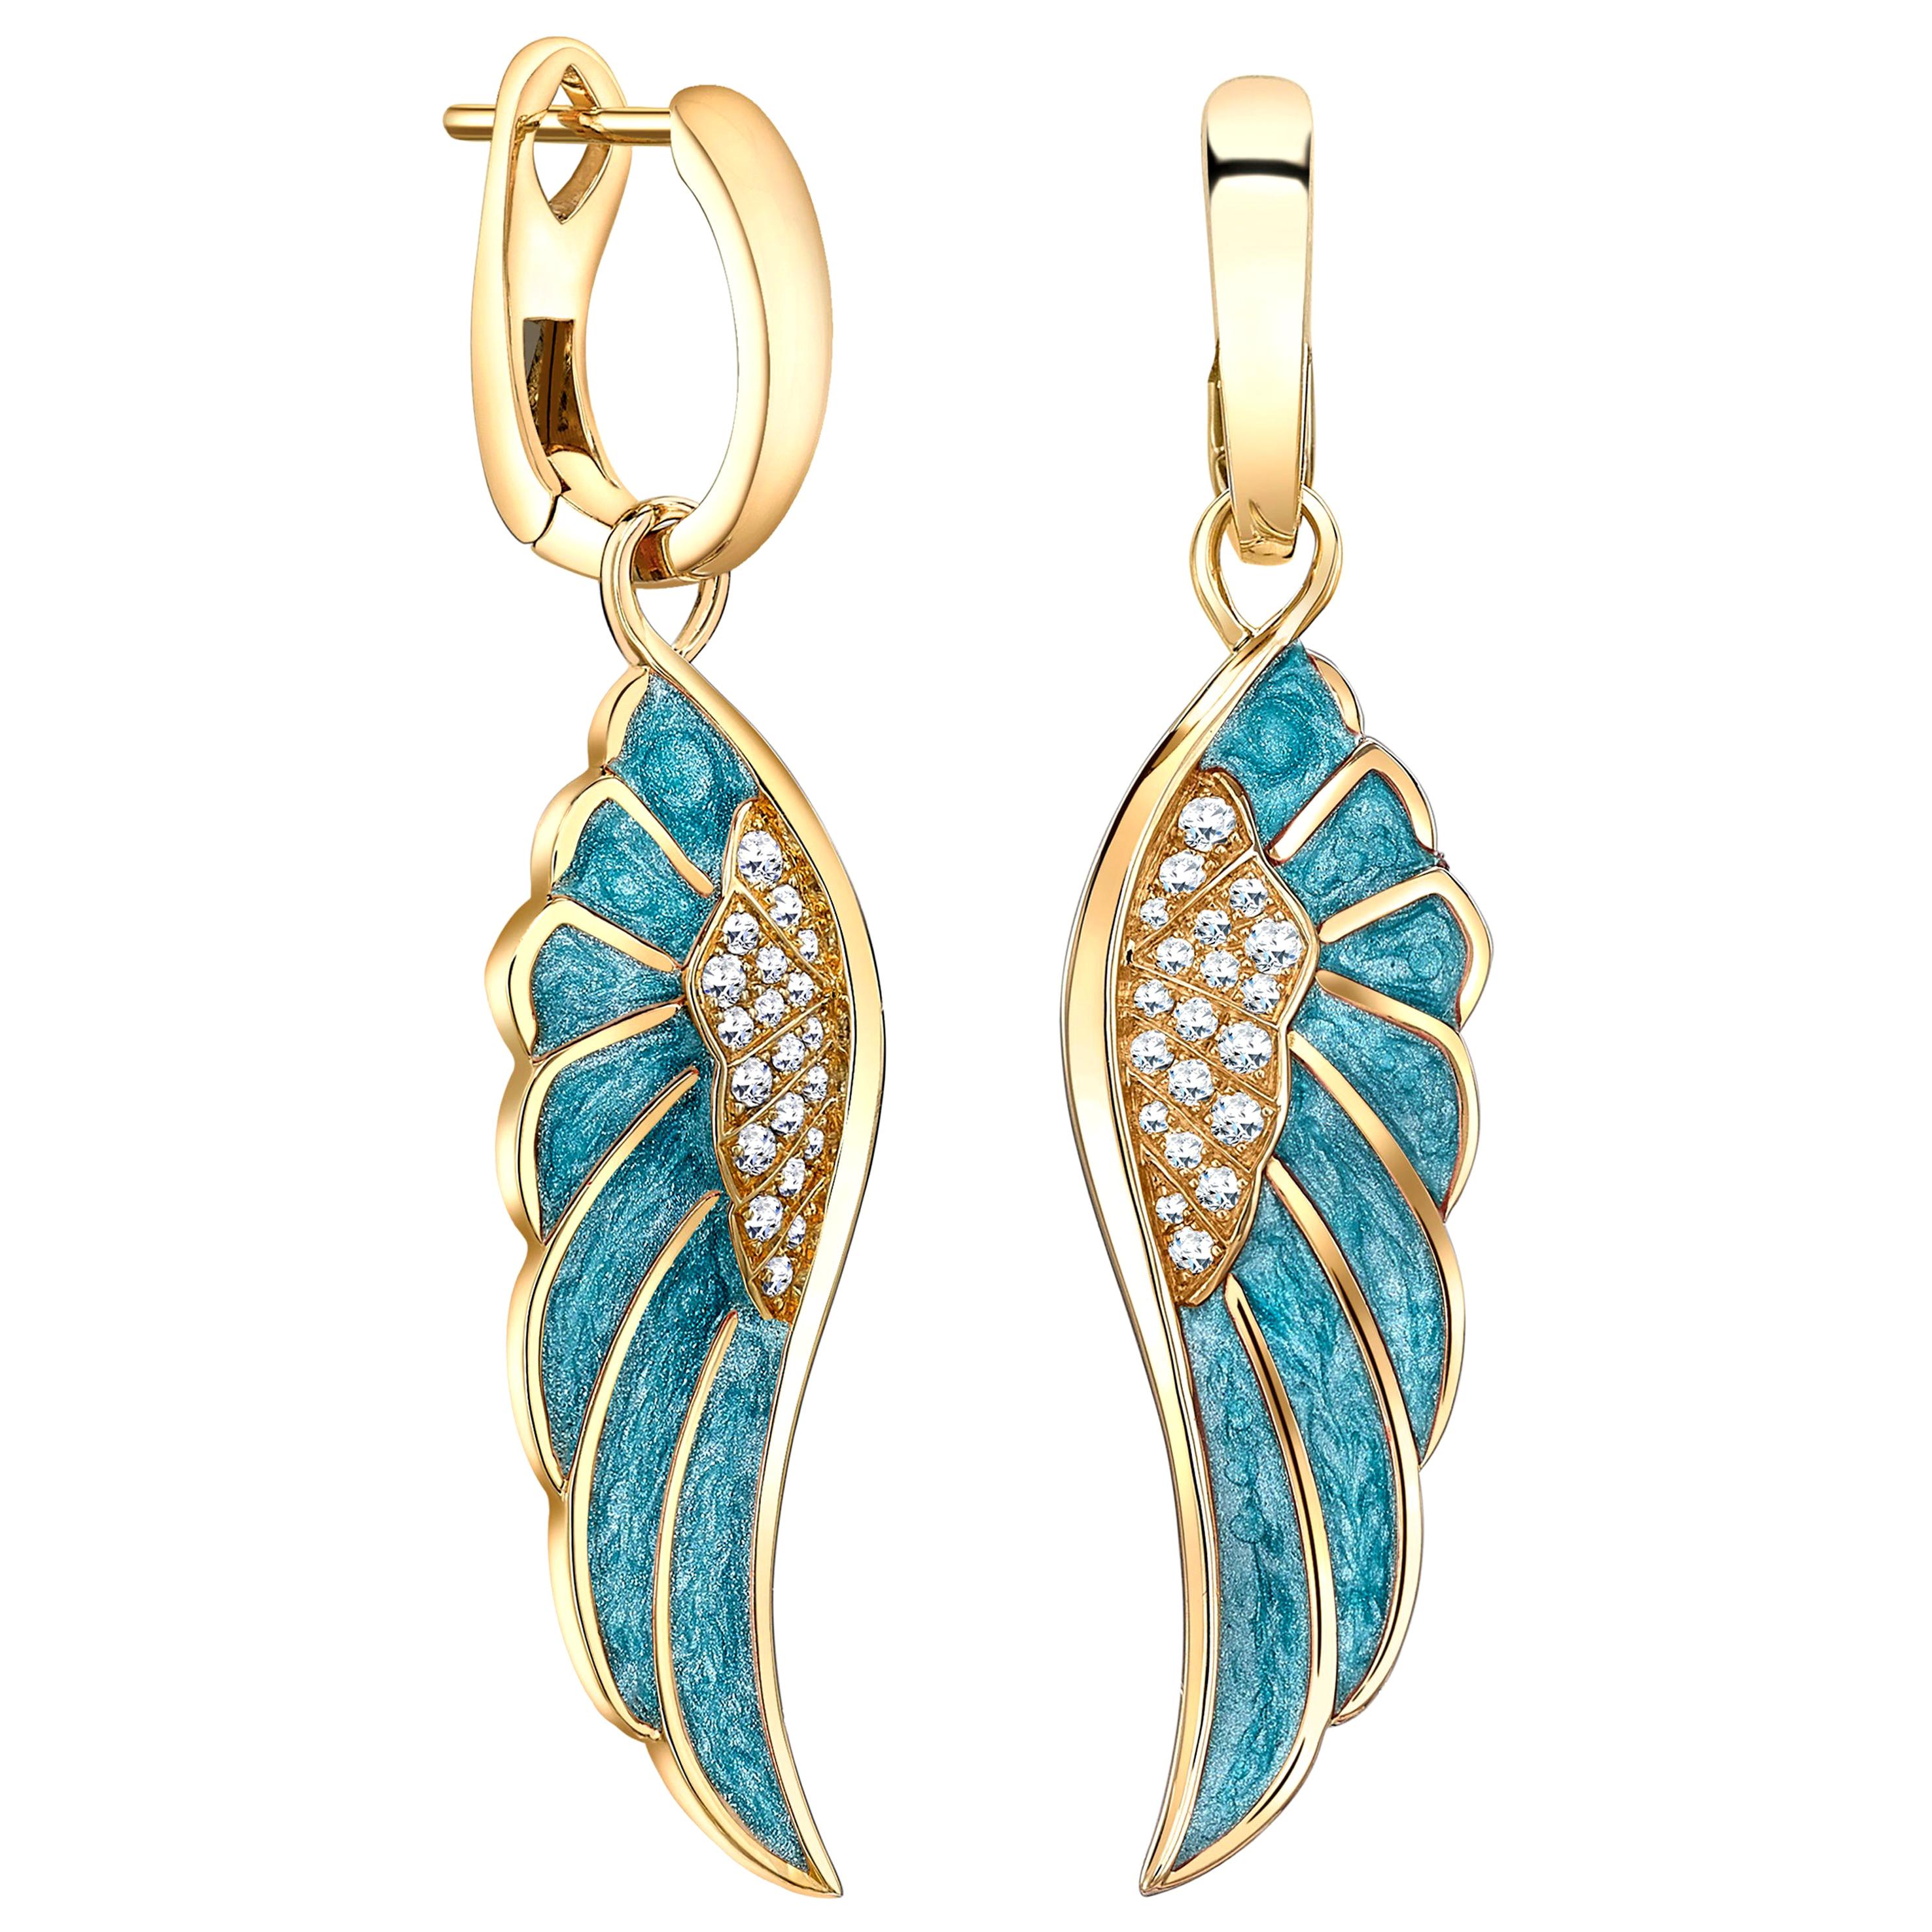 Garrard 'Wings Reflection' 18 Karat Gold White Diamond and Enamel Earrings For Sale